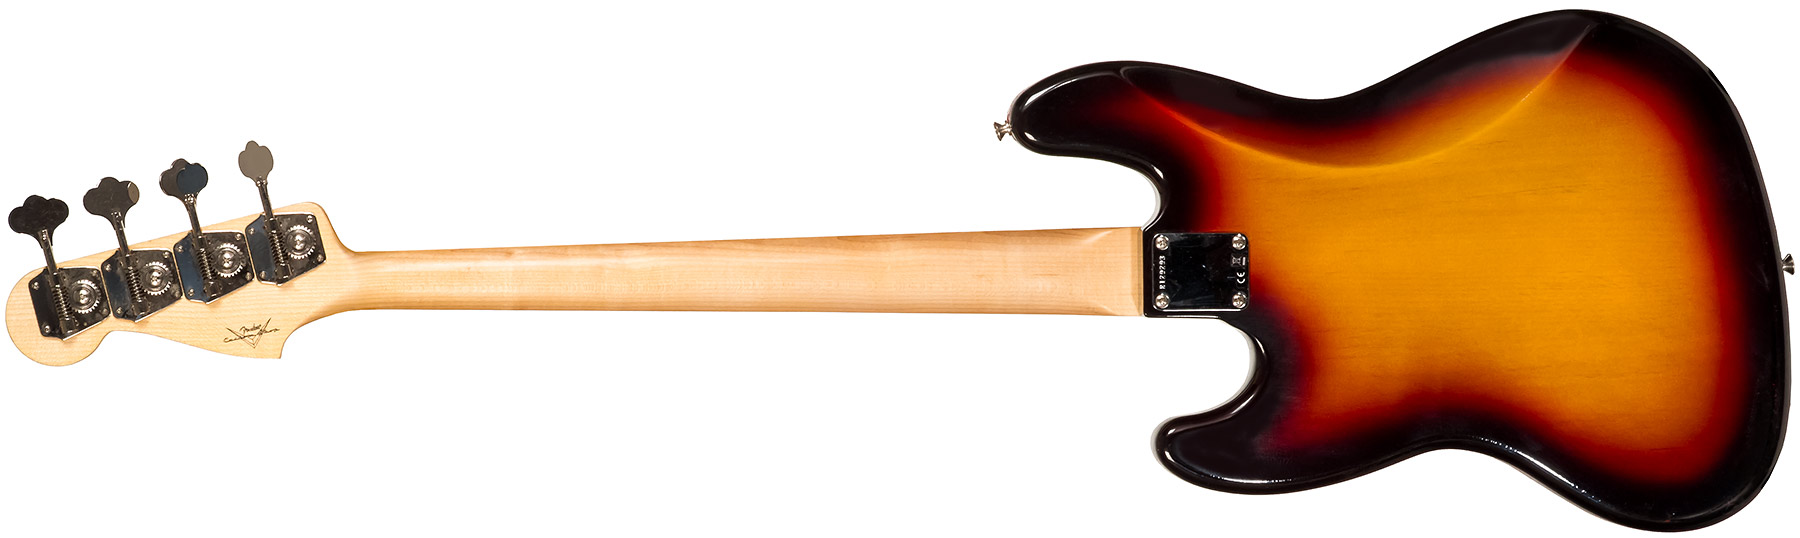 Fender Custom Shop Jazz Bass 1964 Rw #r129293 - Closet Classic 3-color Sunburst - Bajo eléctrico de cuerpo sólido - Variation 1